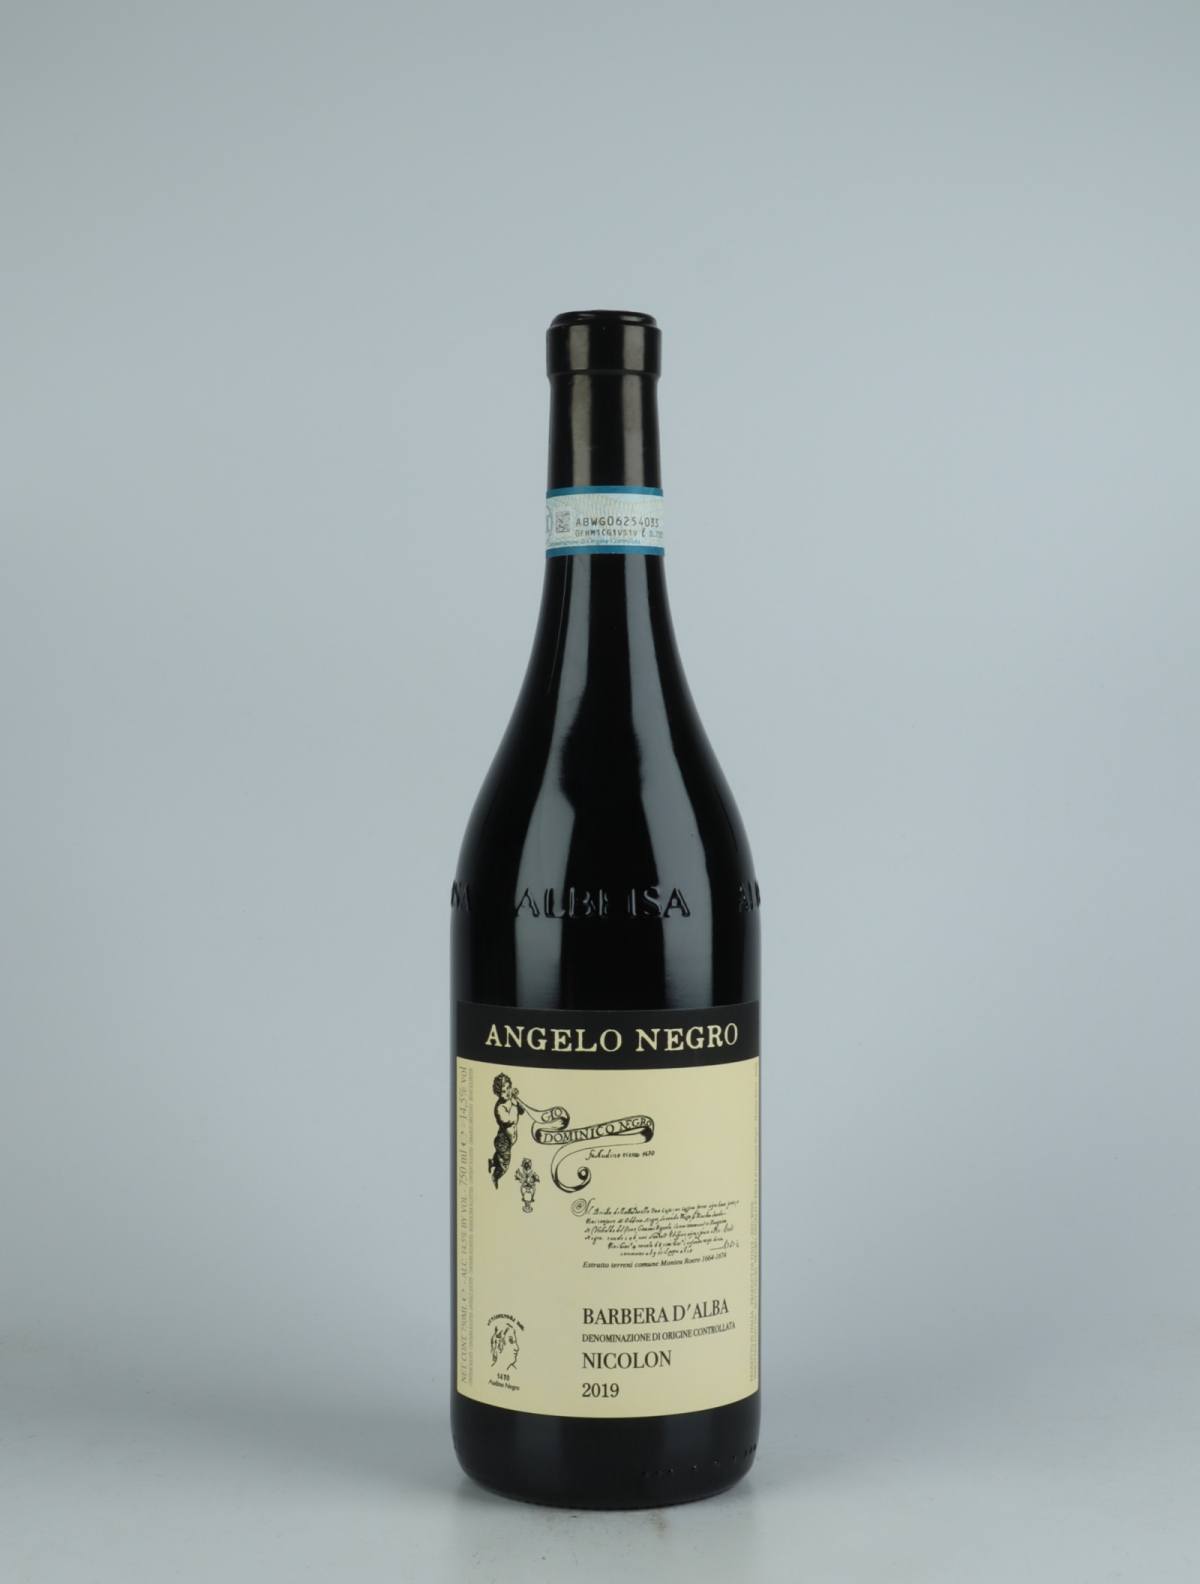 En flaske 2019 Barbera d'Alba - Nicolon Rødvin fra Angelo Negro, Piemonte i Italien